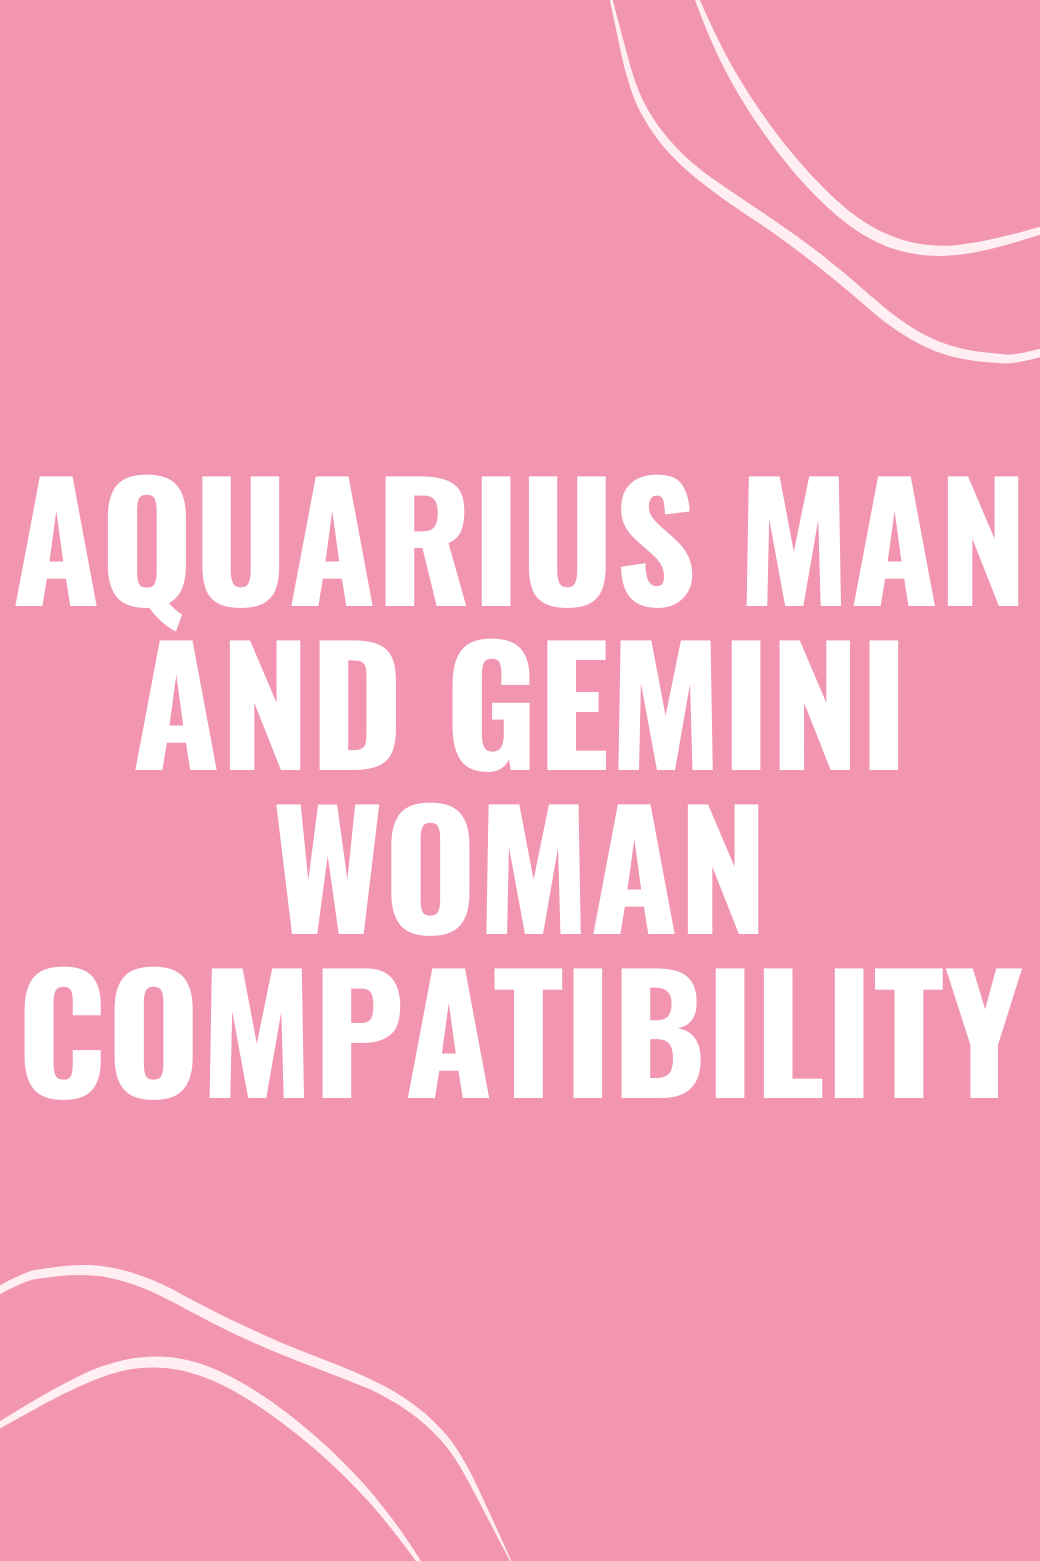 Aquarius Man and Gemini Woman Compatibility